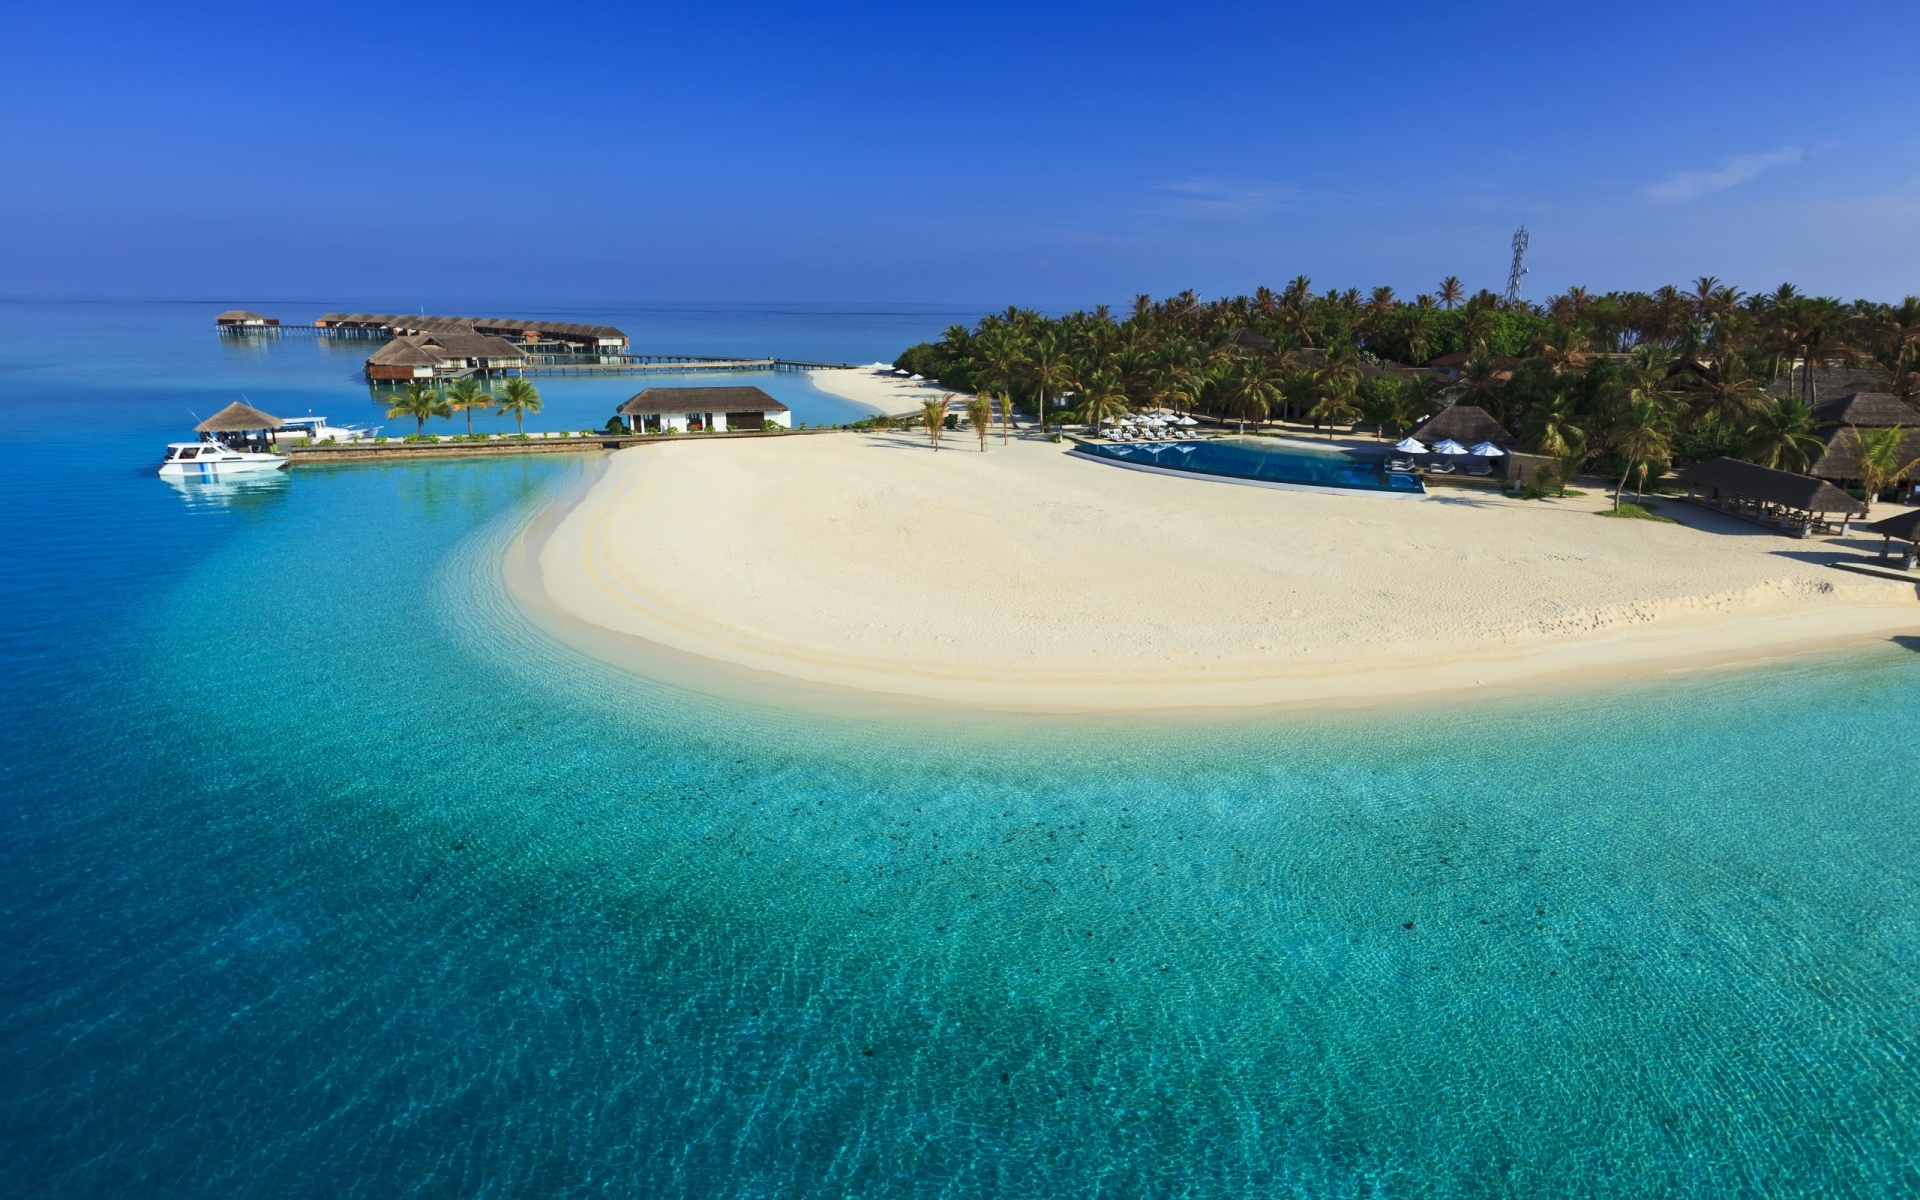 Maldives Luxury Resort for 1920 x 1200 widescreen resolution